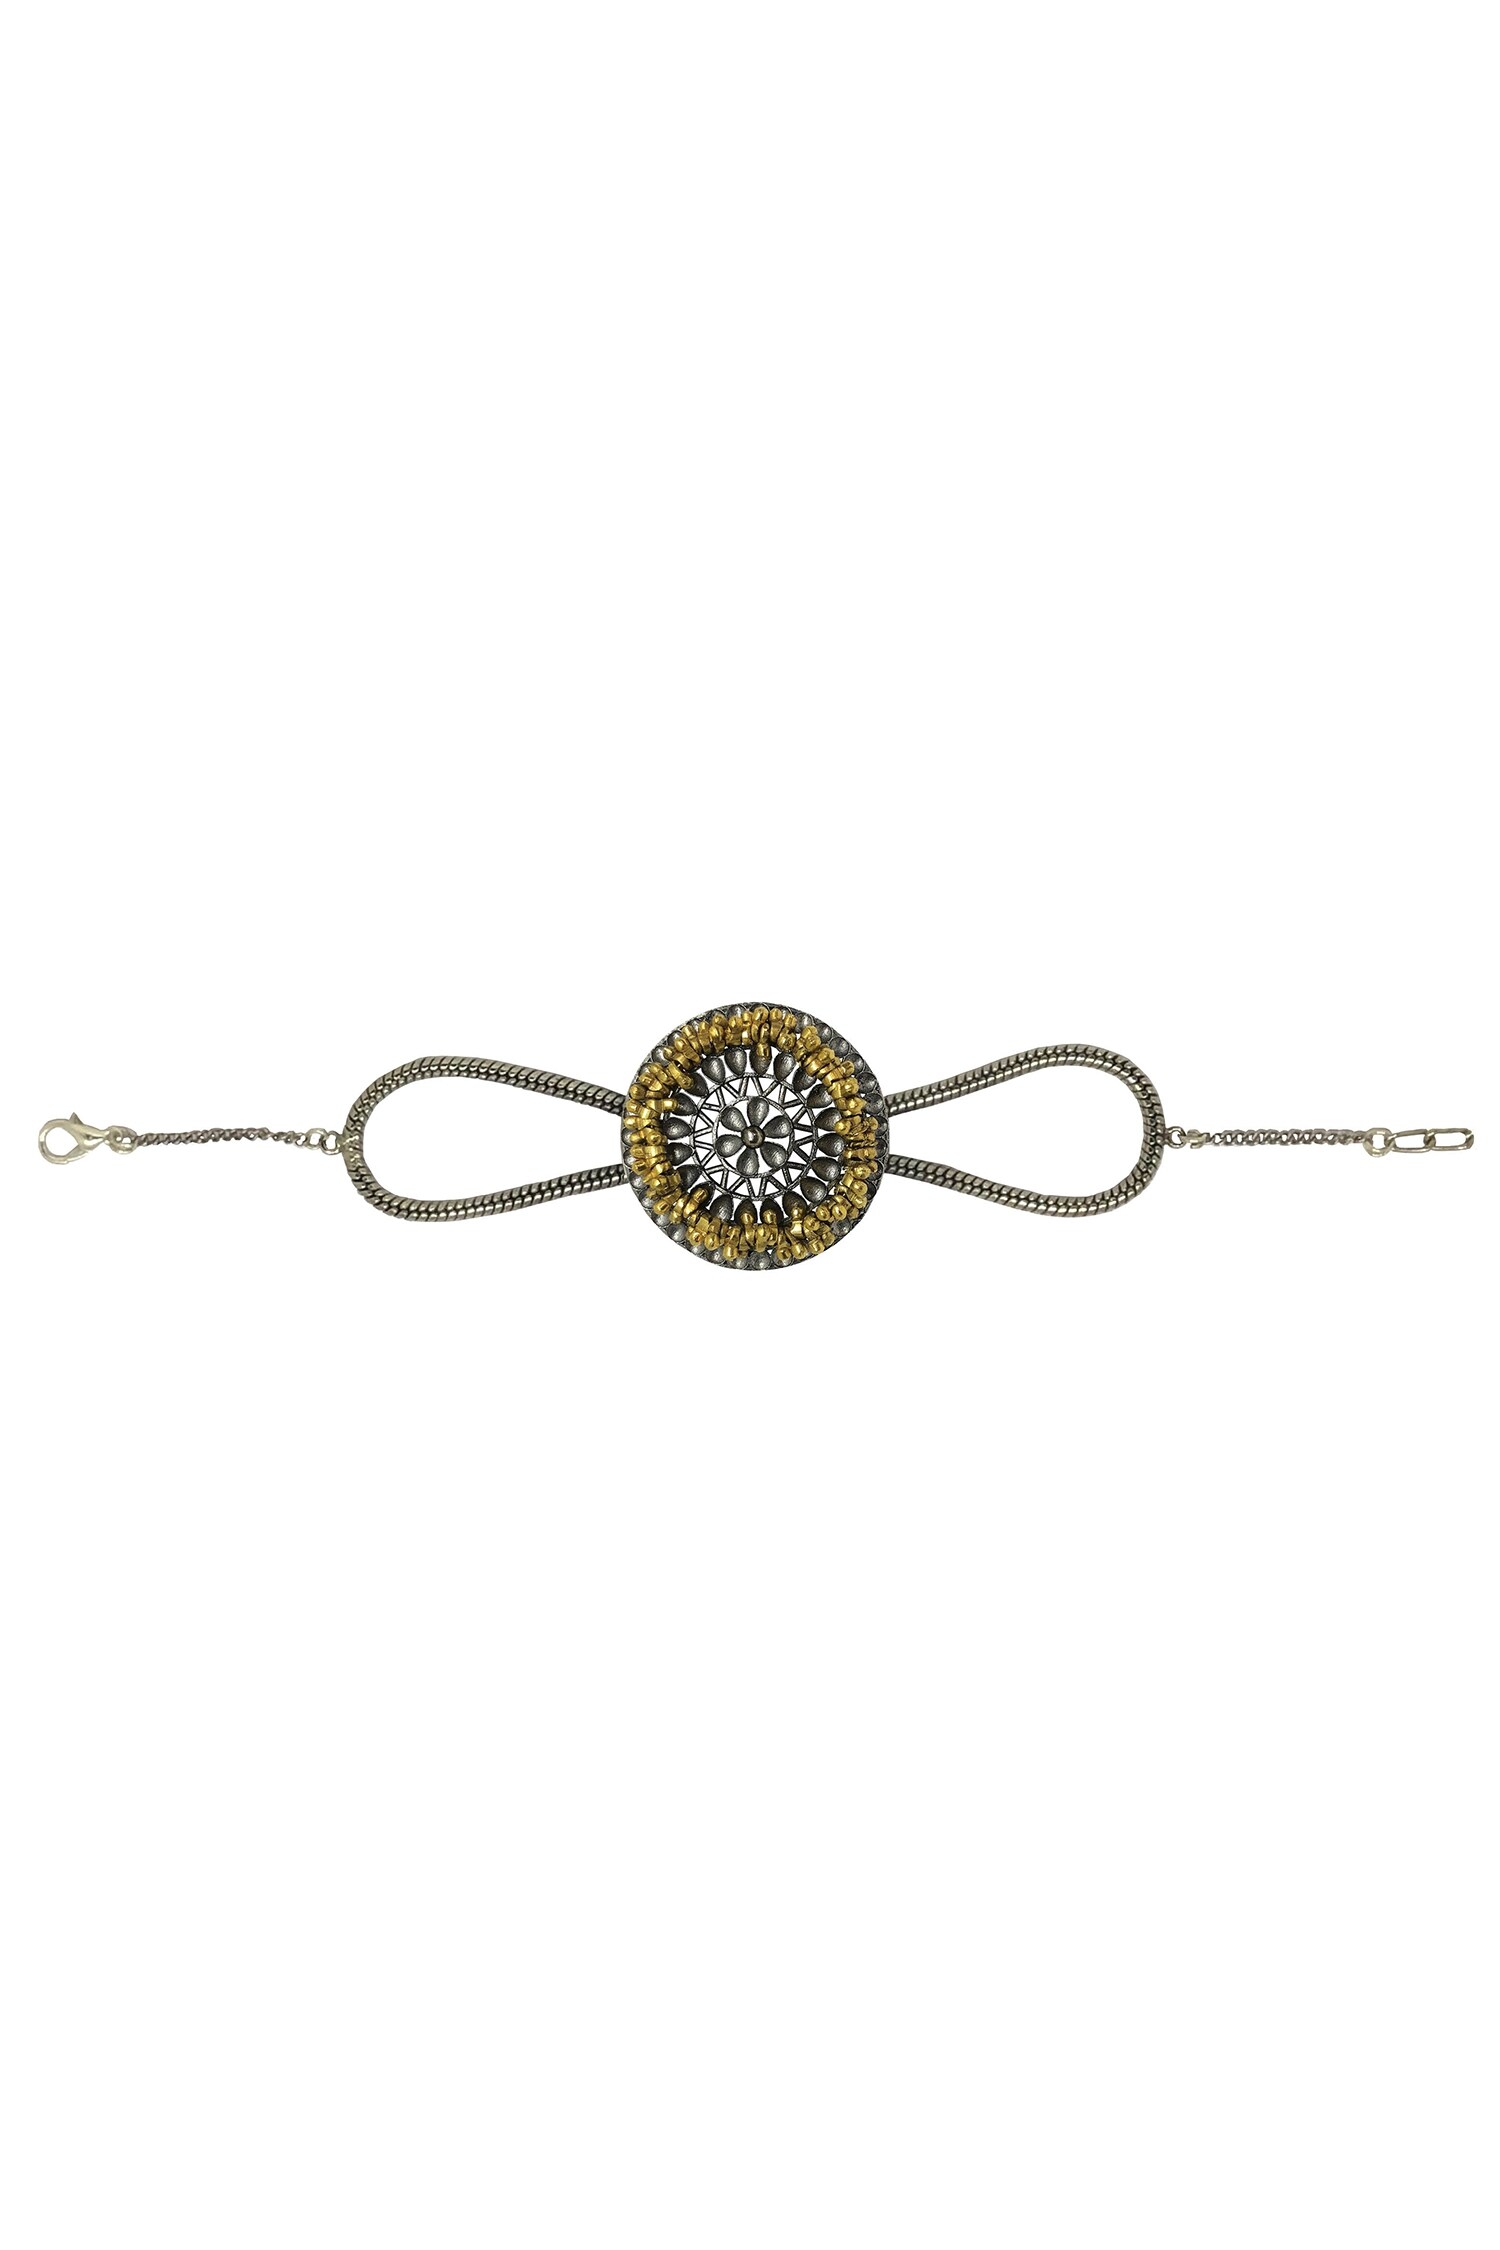 Buy Aaree Accessories Mandala Motif Bracelet Online | Aza Fashions